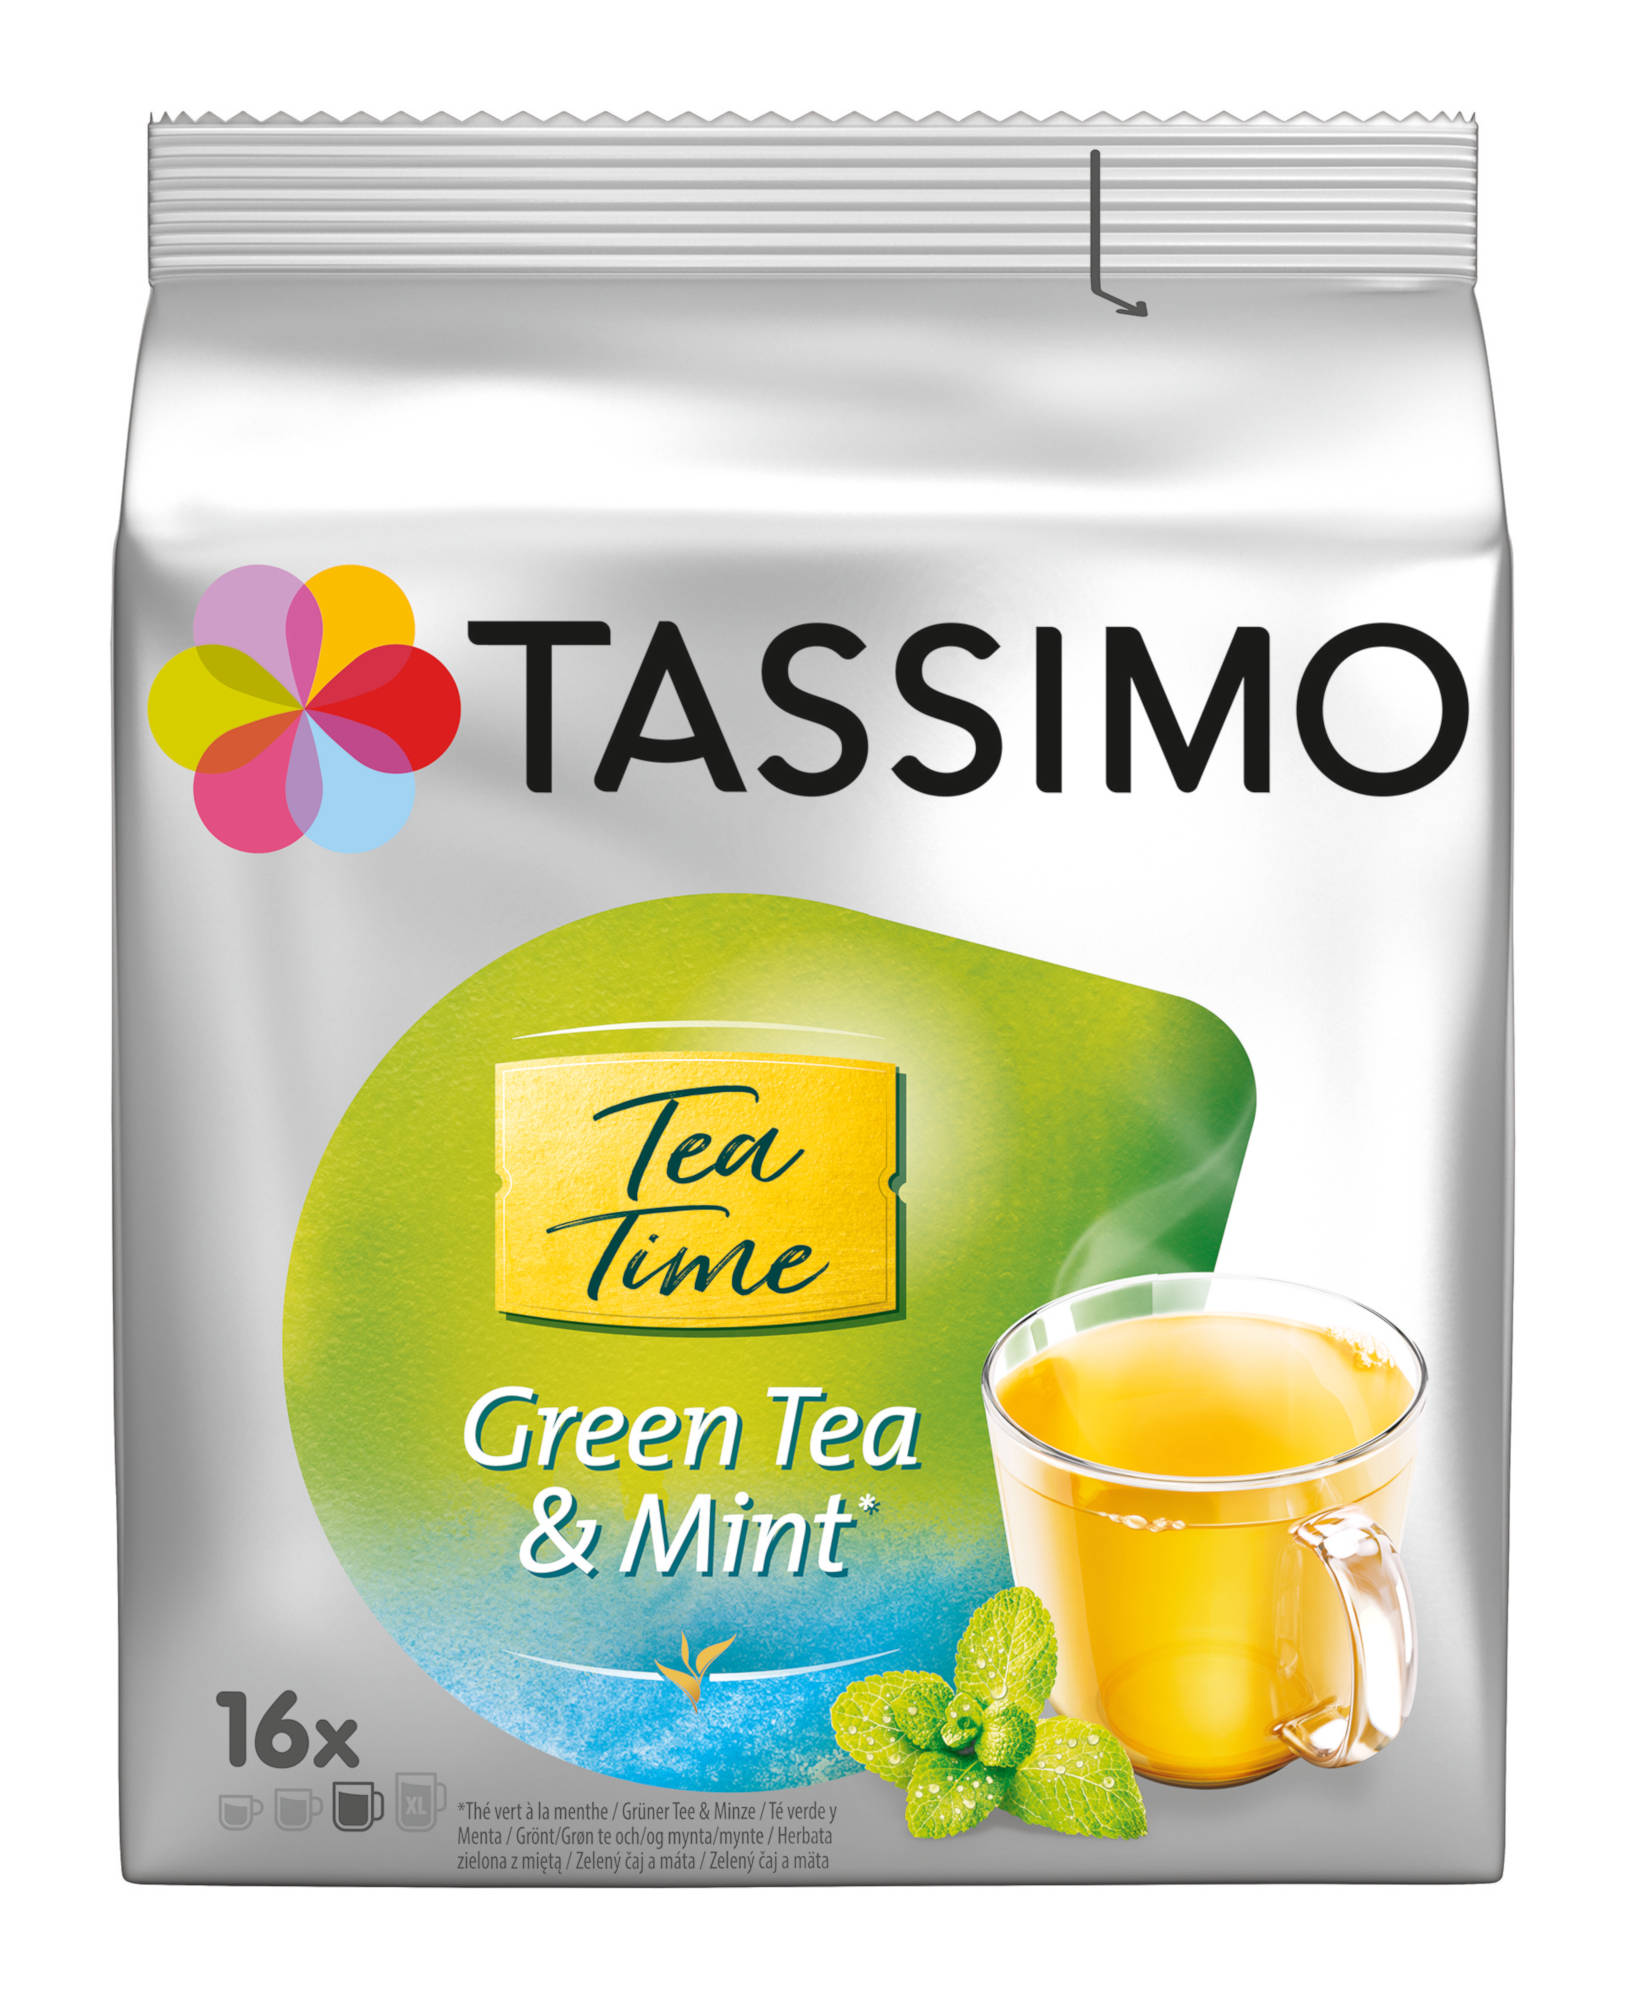 5 mit Tea TASSIMO Discs (T-Disc System)) Maschine Minze T Tee Grüner x 16 Teekapseln (Tassimo Getränke Time